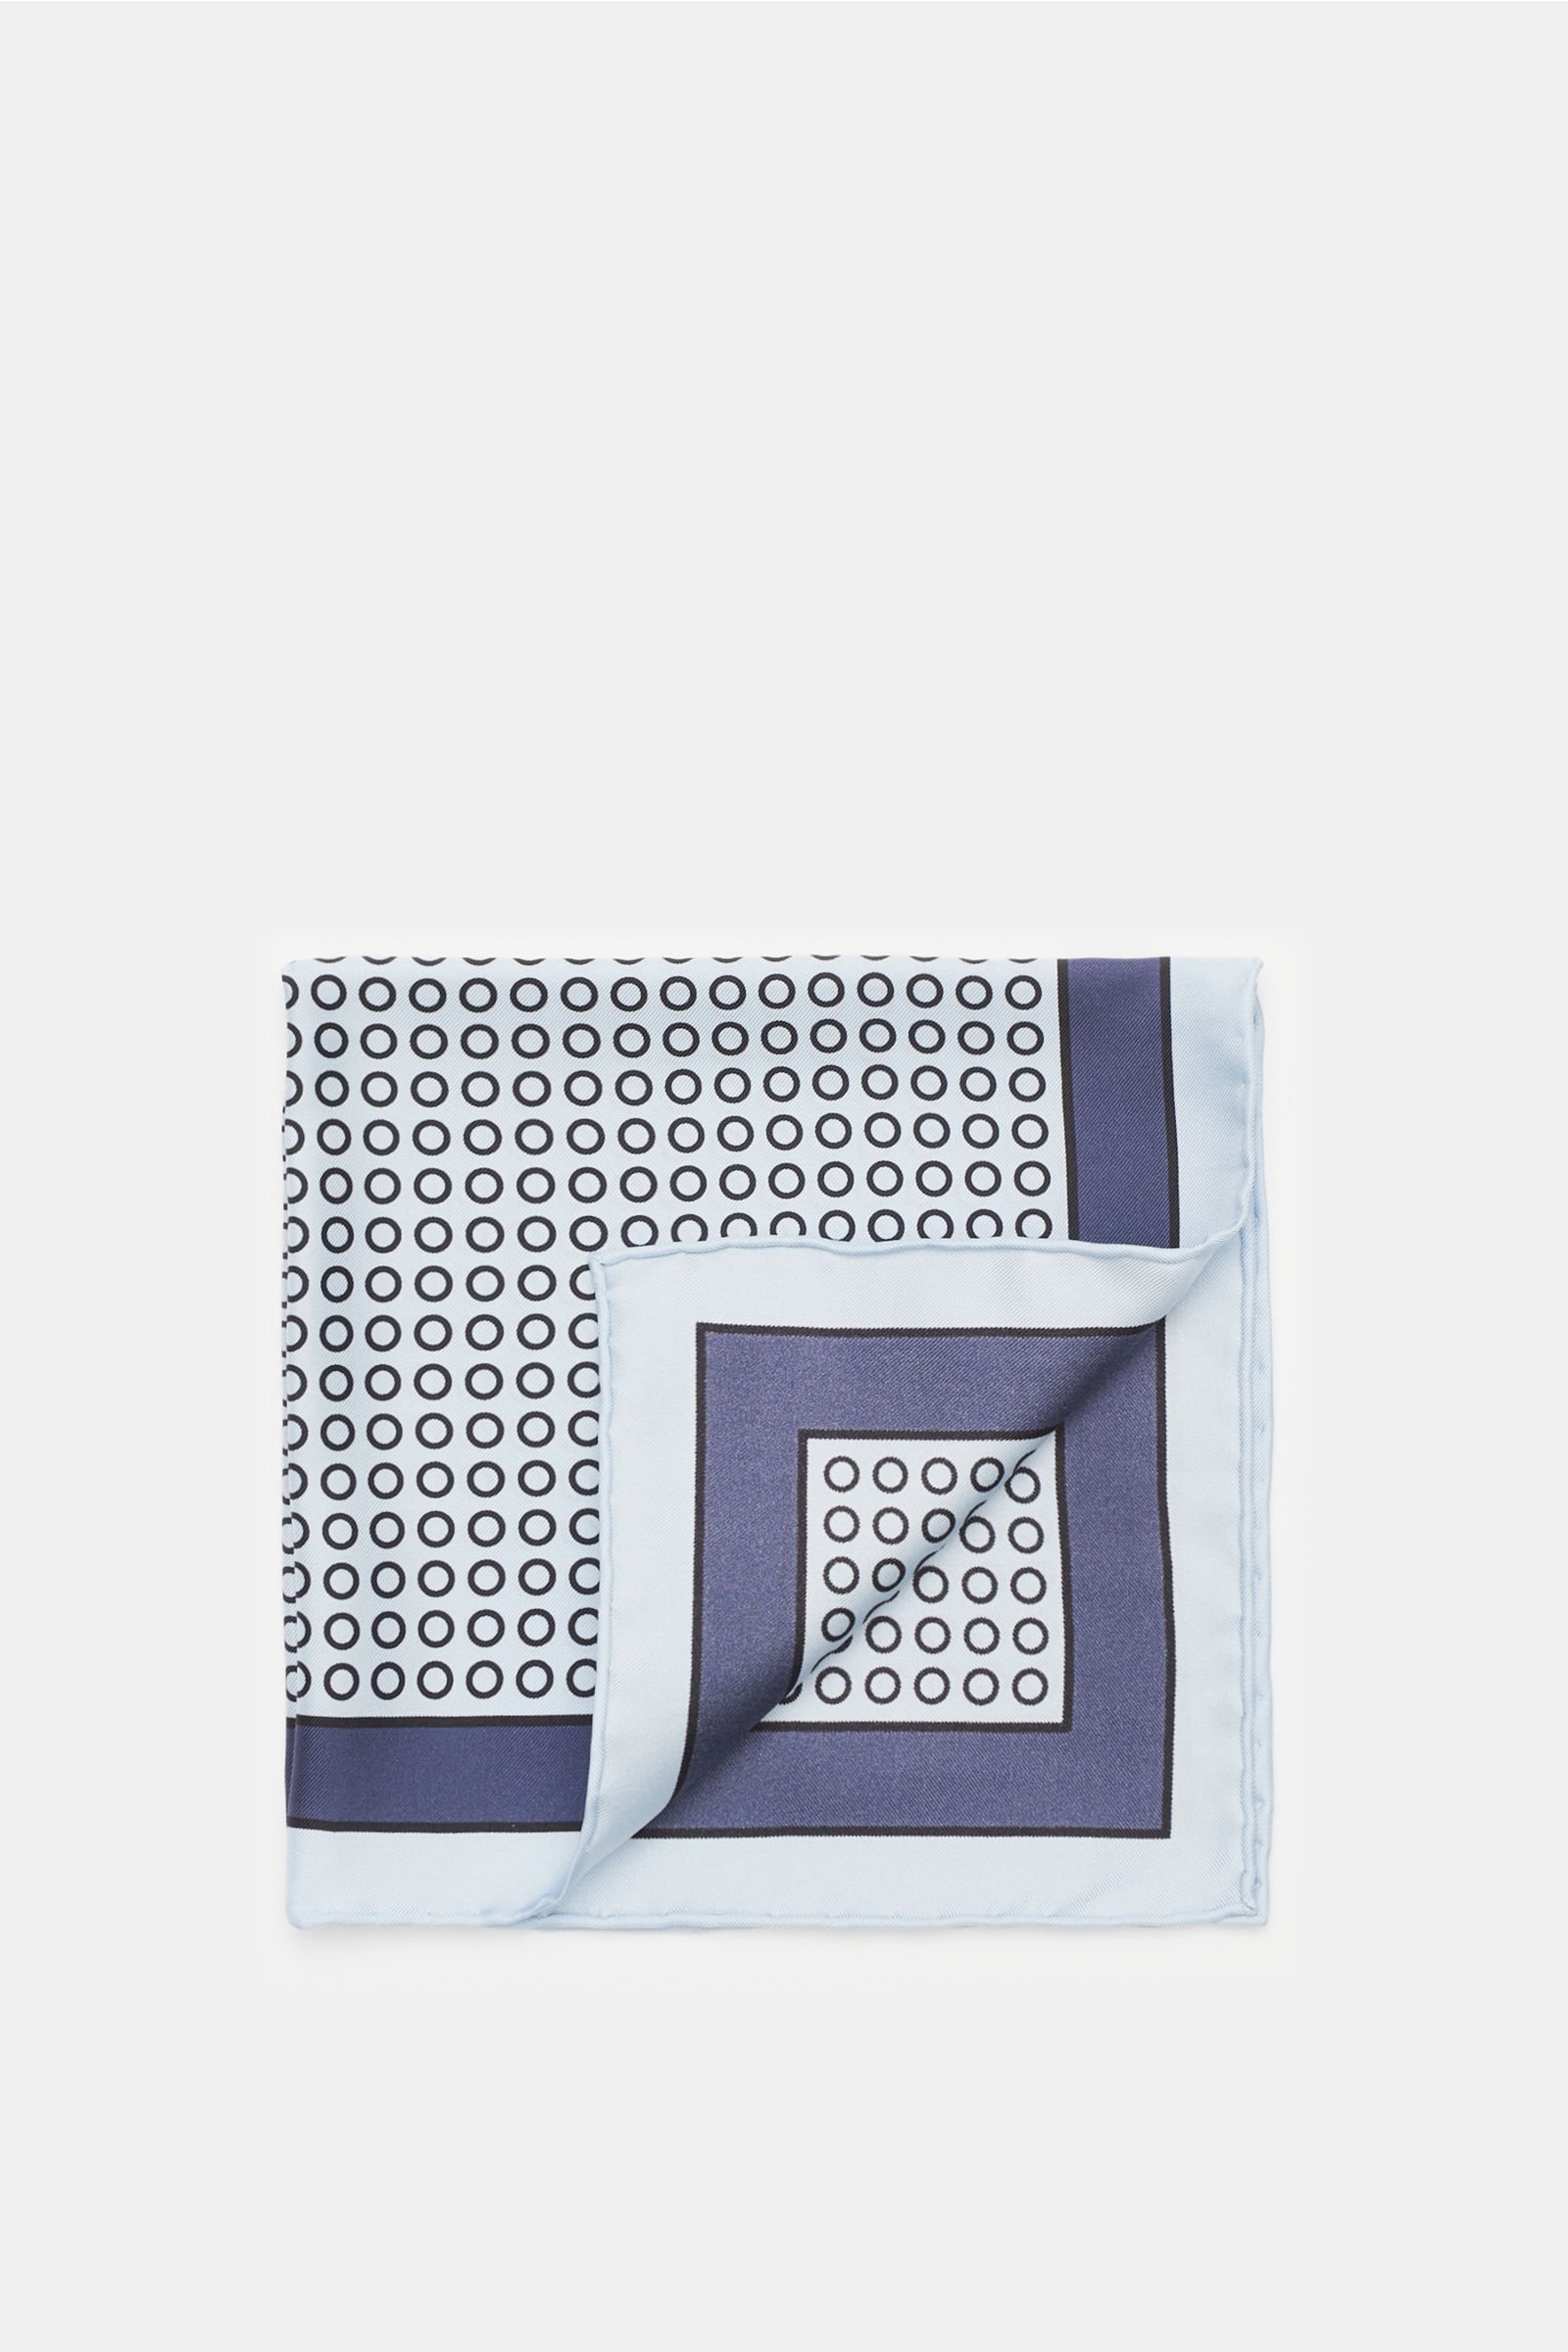 TOM FORD pocket square light blue/navy with polka dots | BRAUN Hamburg